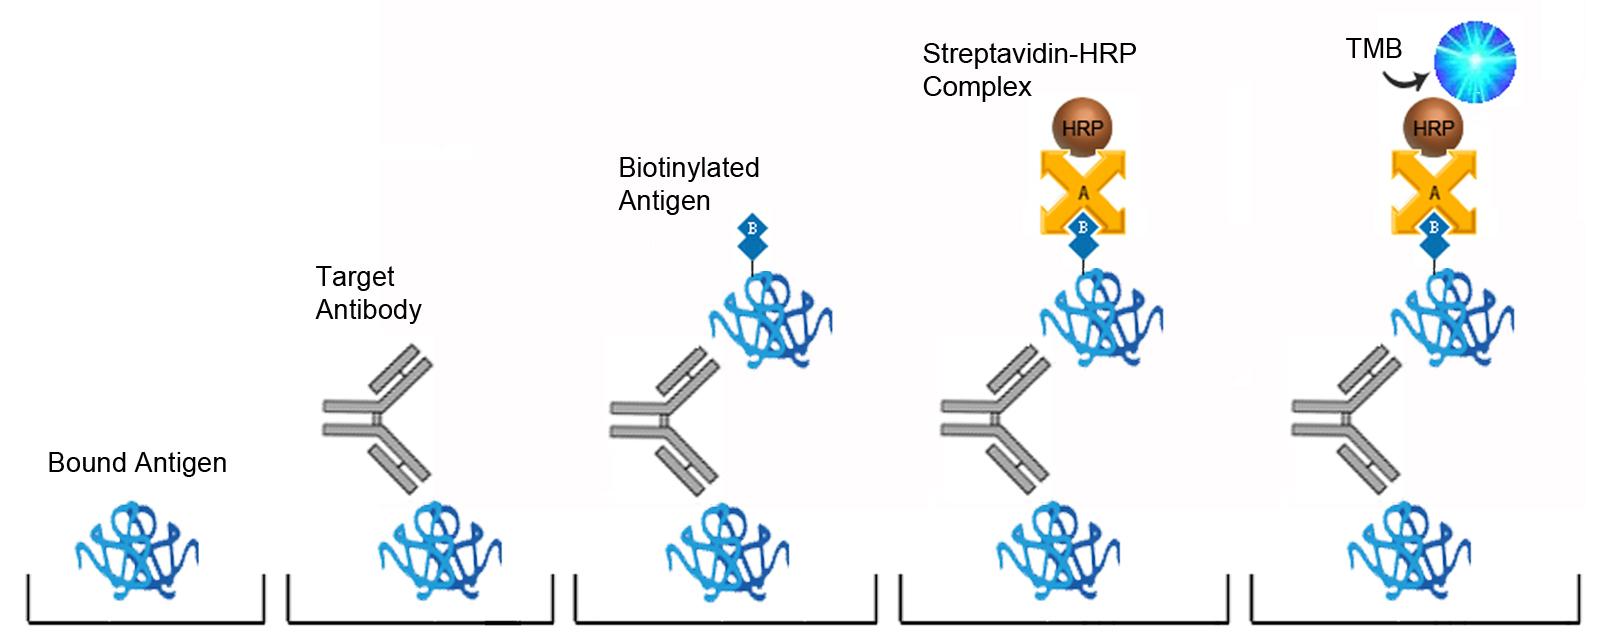 Anti-Survivin Antibody ELISA Kit - Sandwich BoundAntigen SampleAb AntigenBiotin AvidHRP TMB